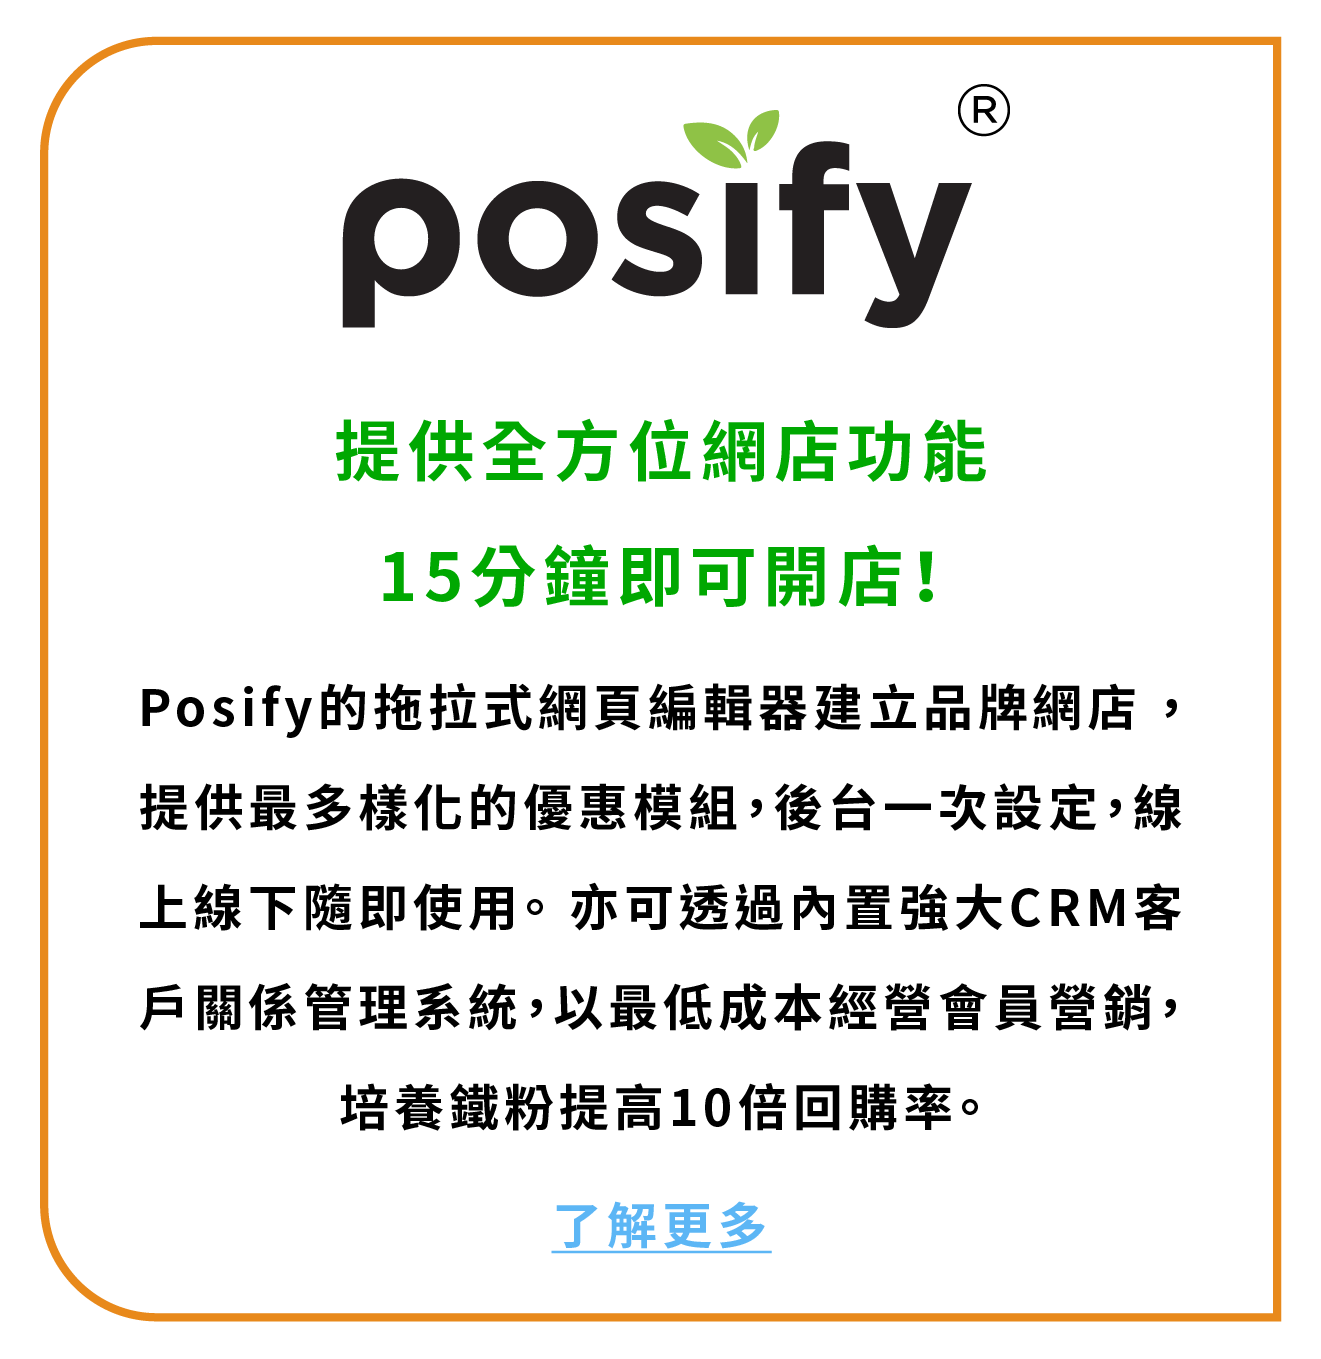 Posify提供全方位網店功能